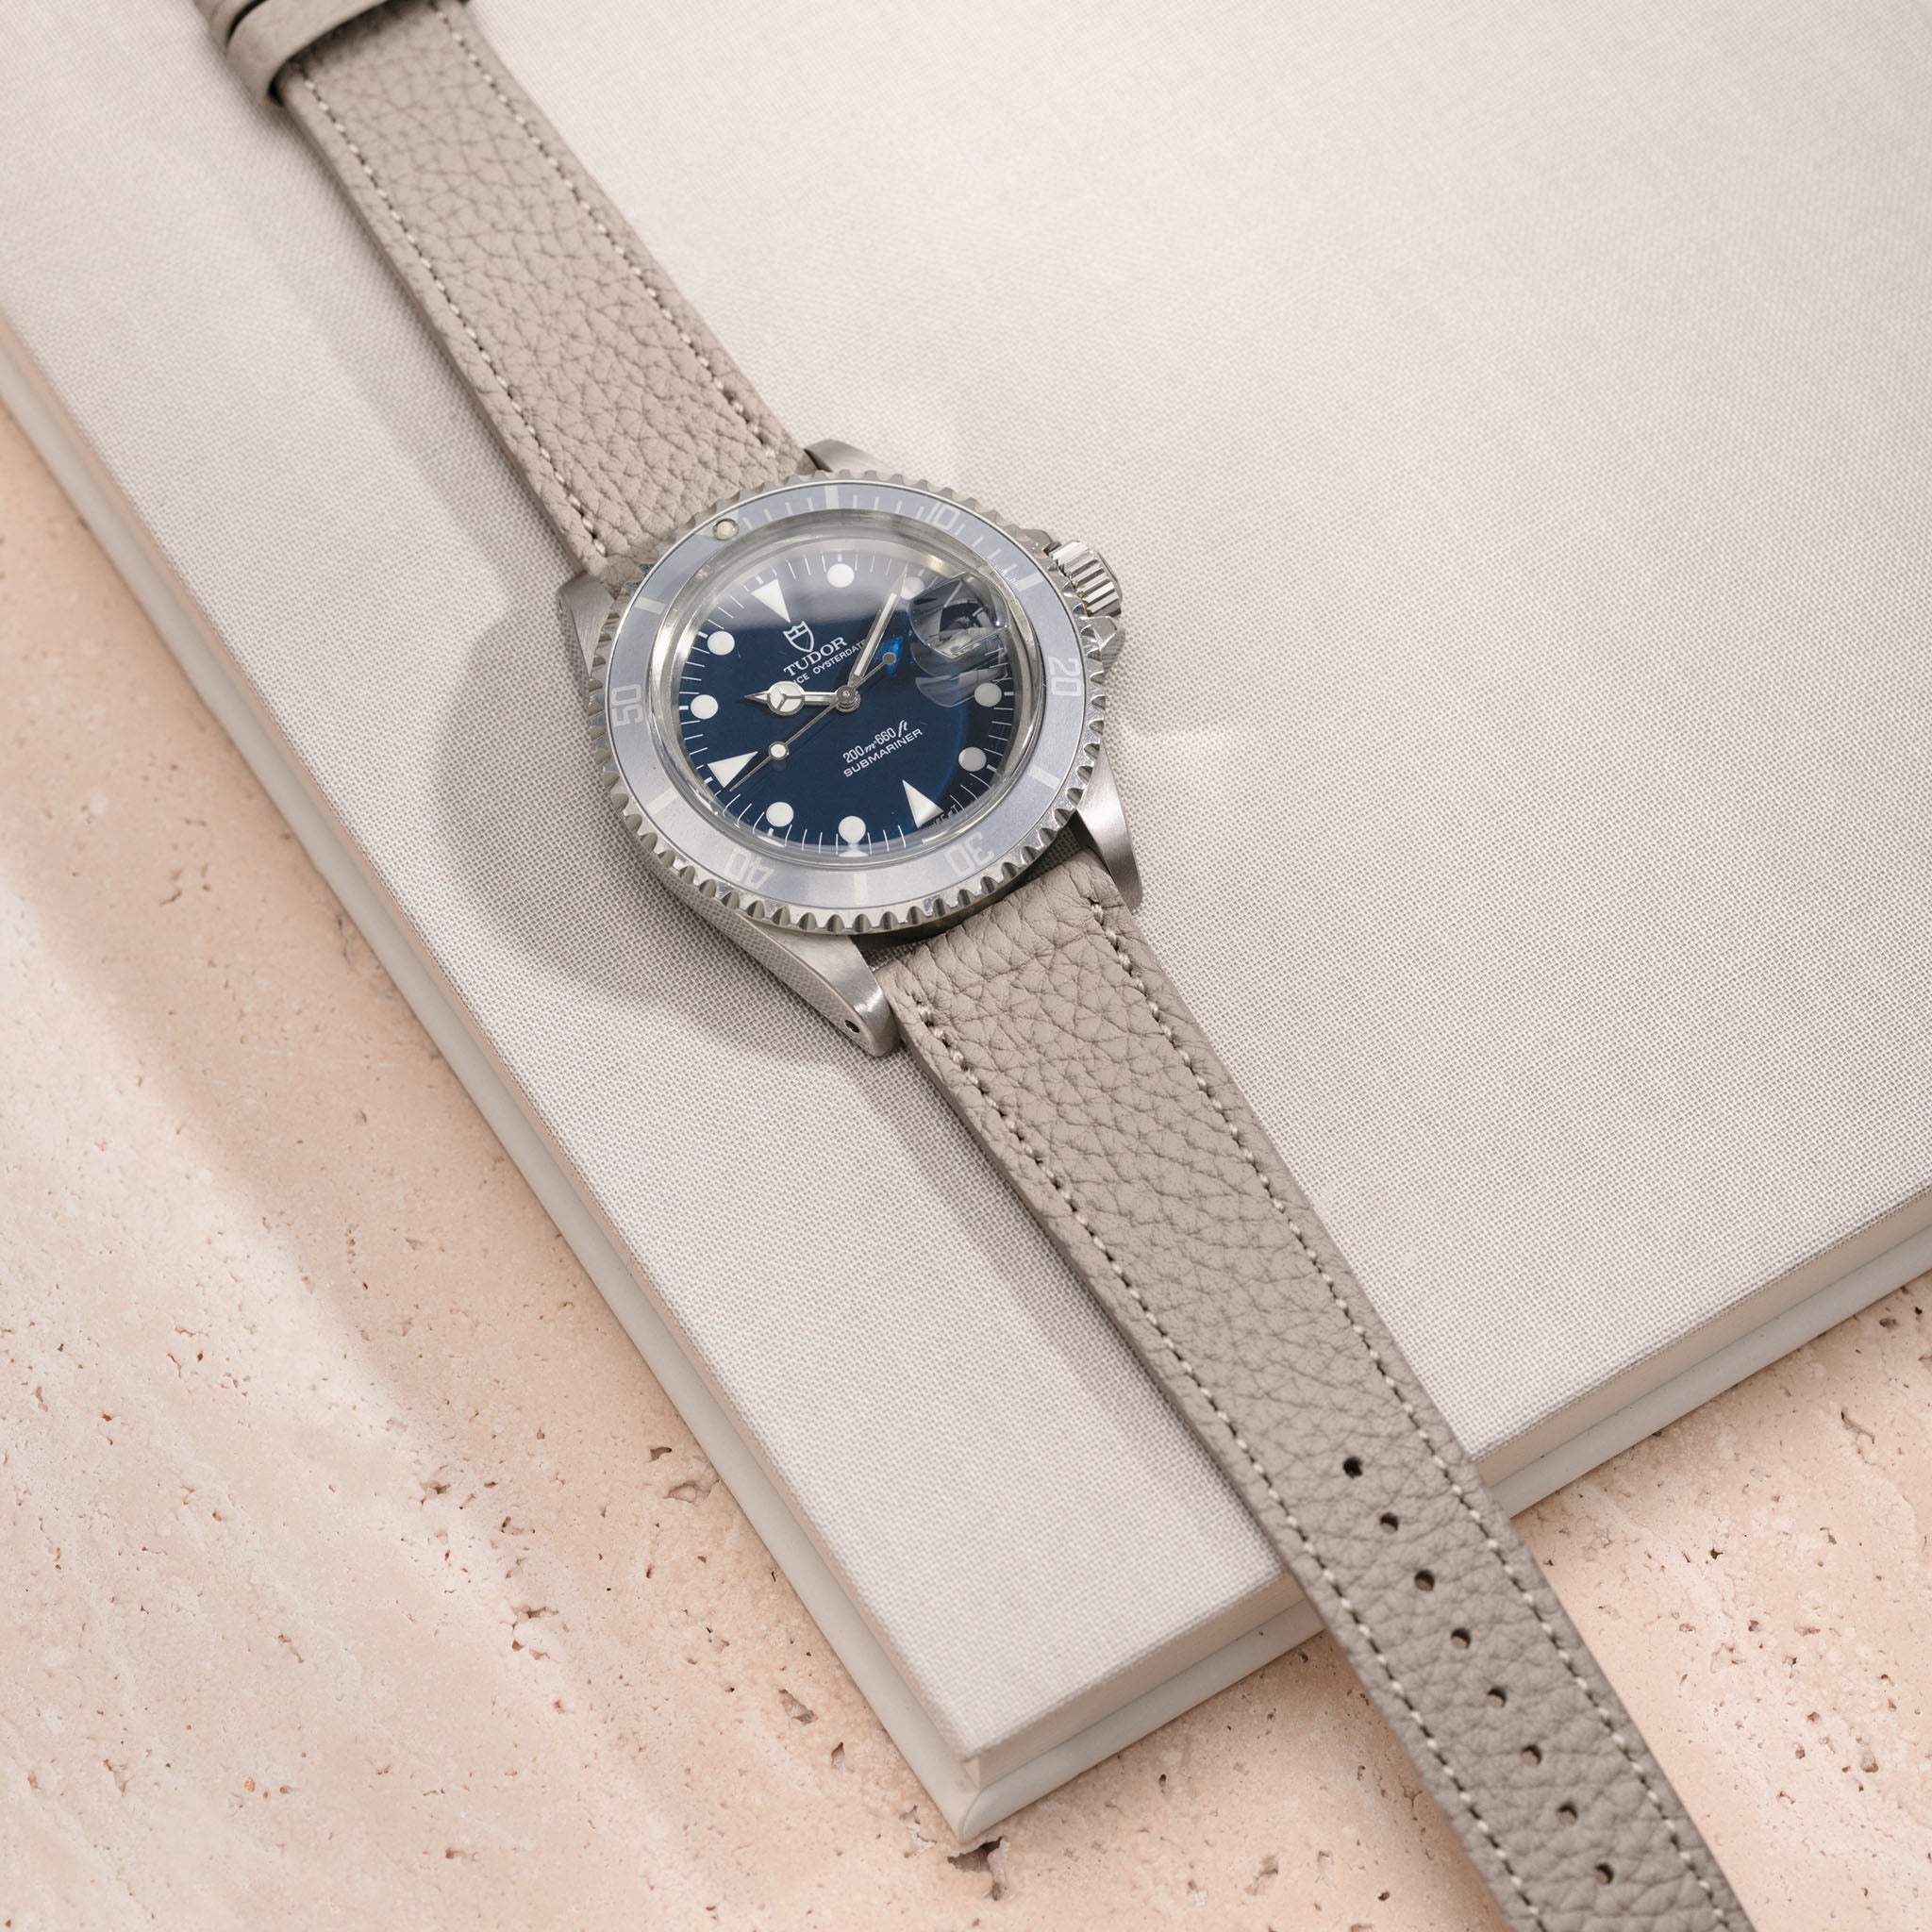 Togo Light Grey Tonal Leather Watch Strap